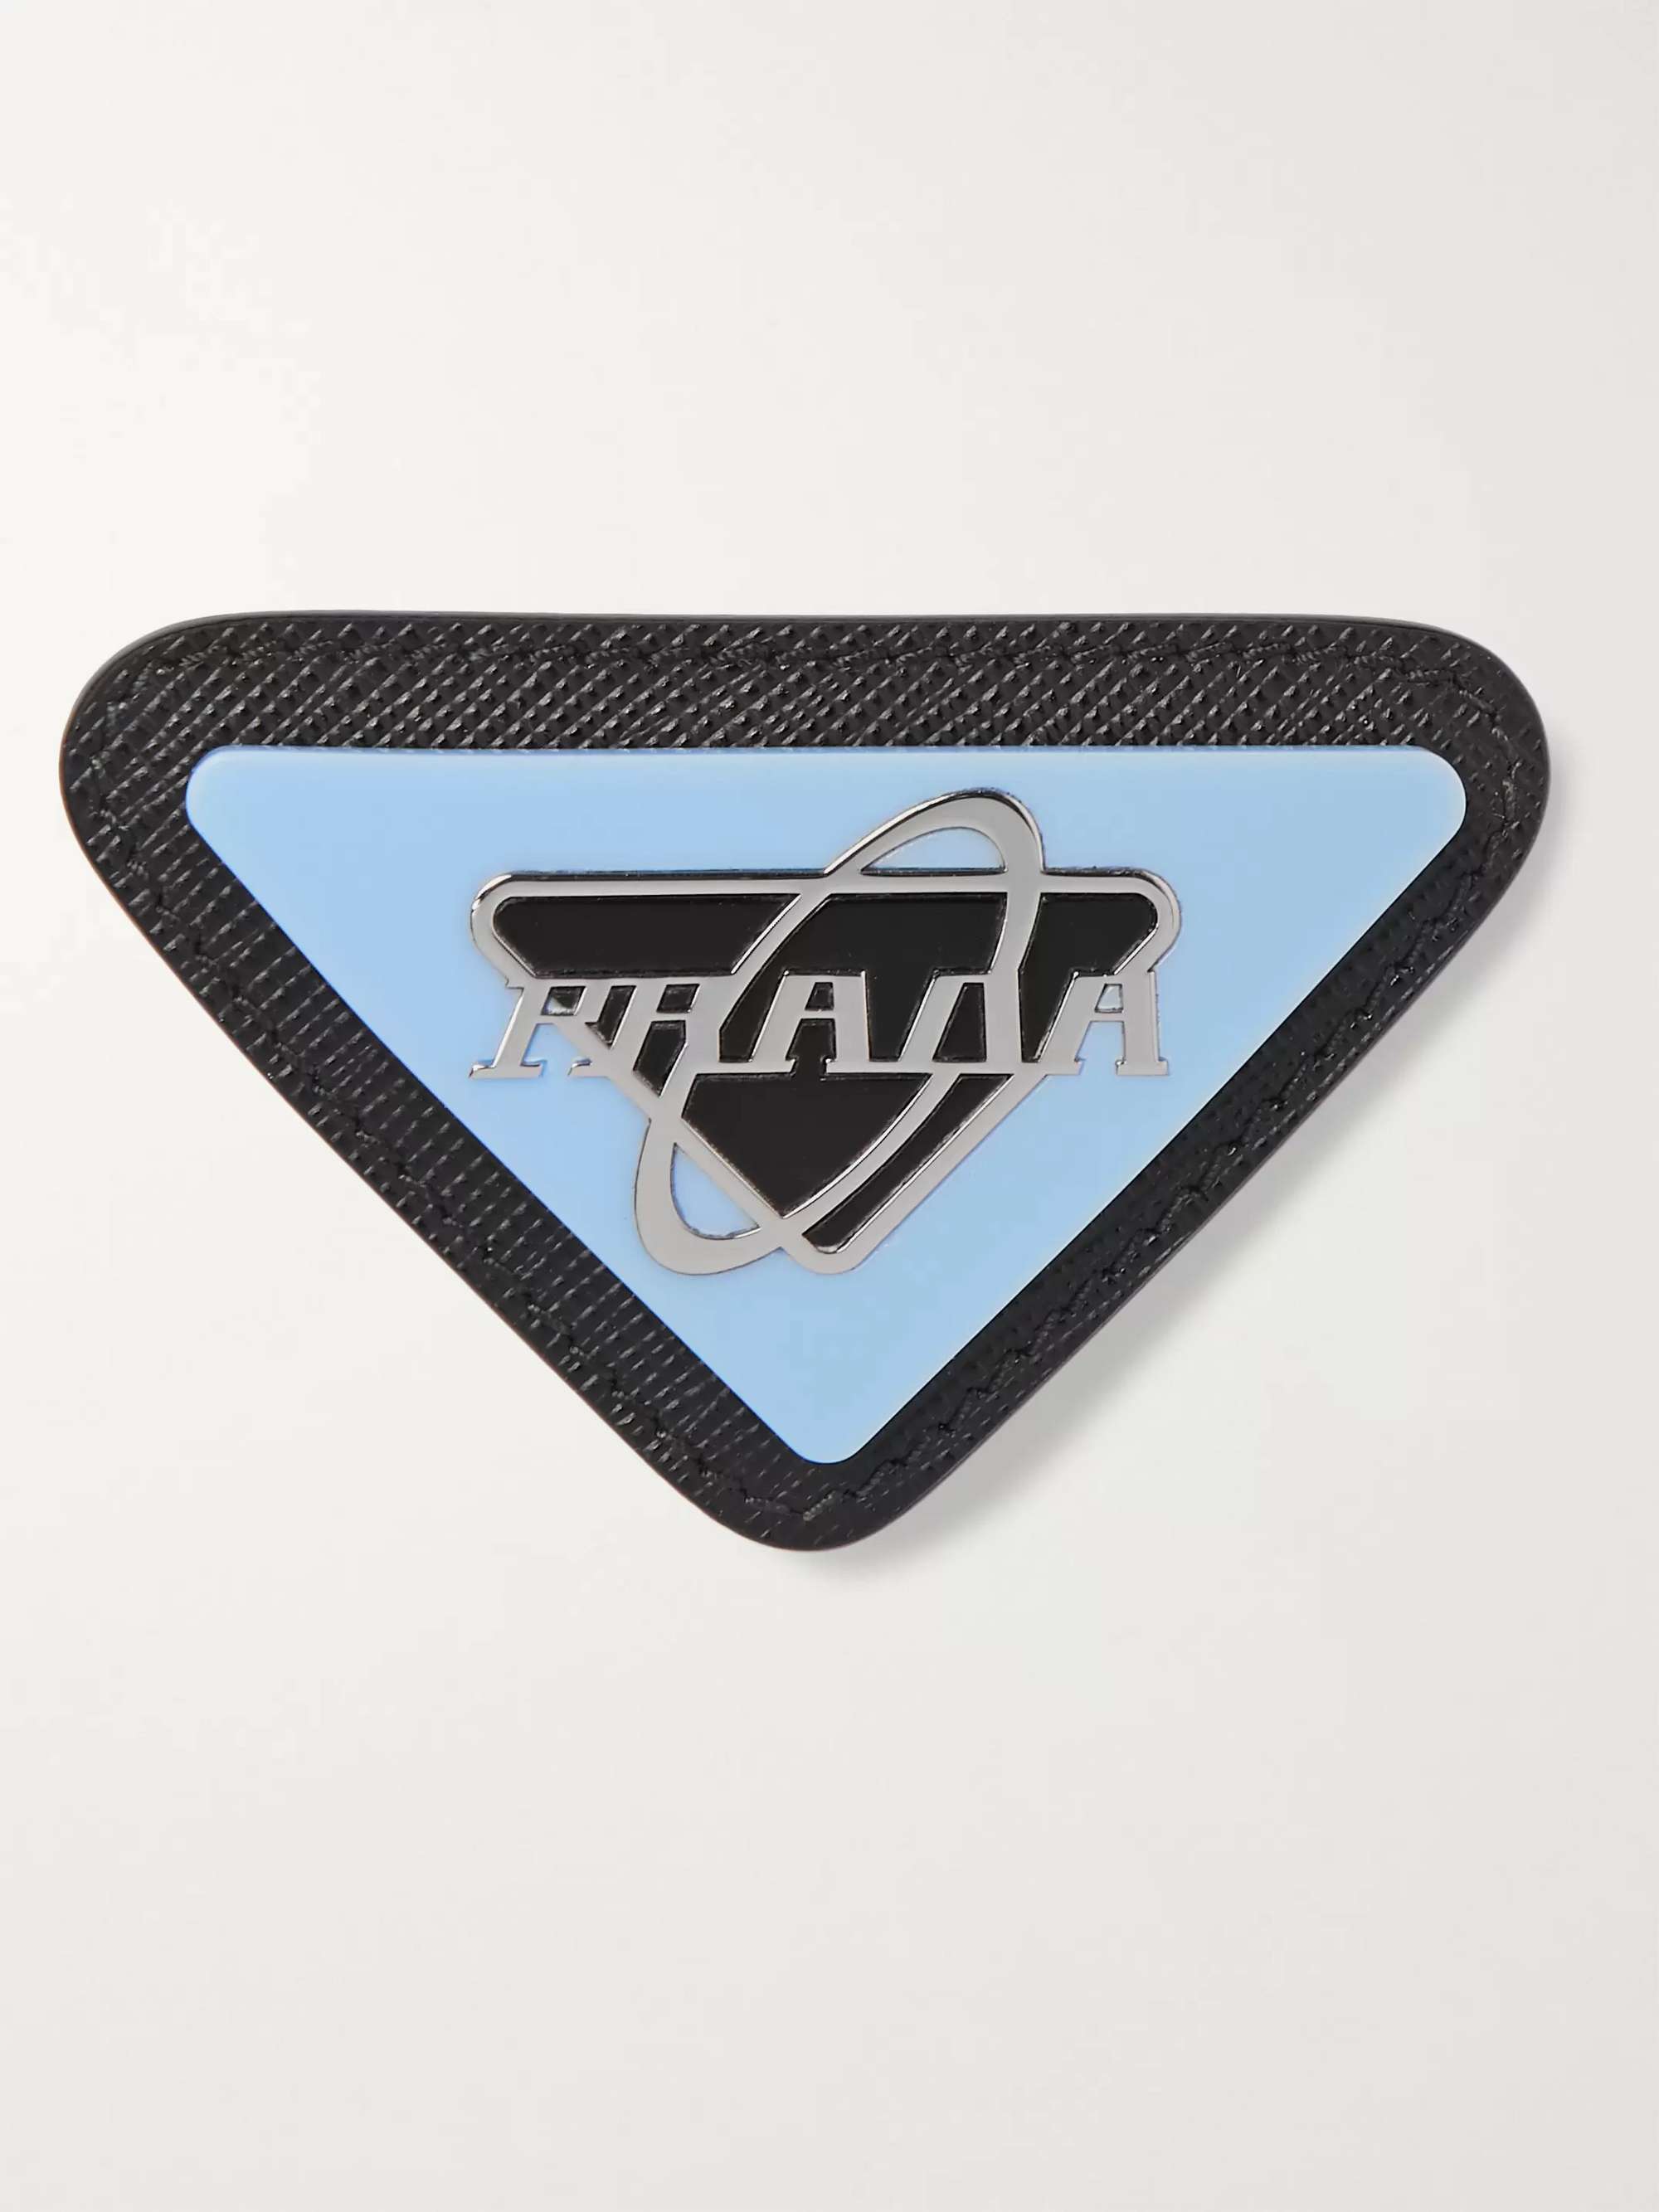 PRADA Saffiano Leather, Steel and Enamel Pin Badge